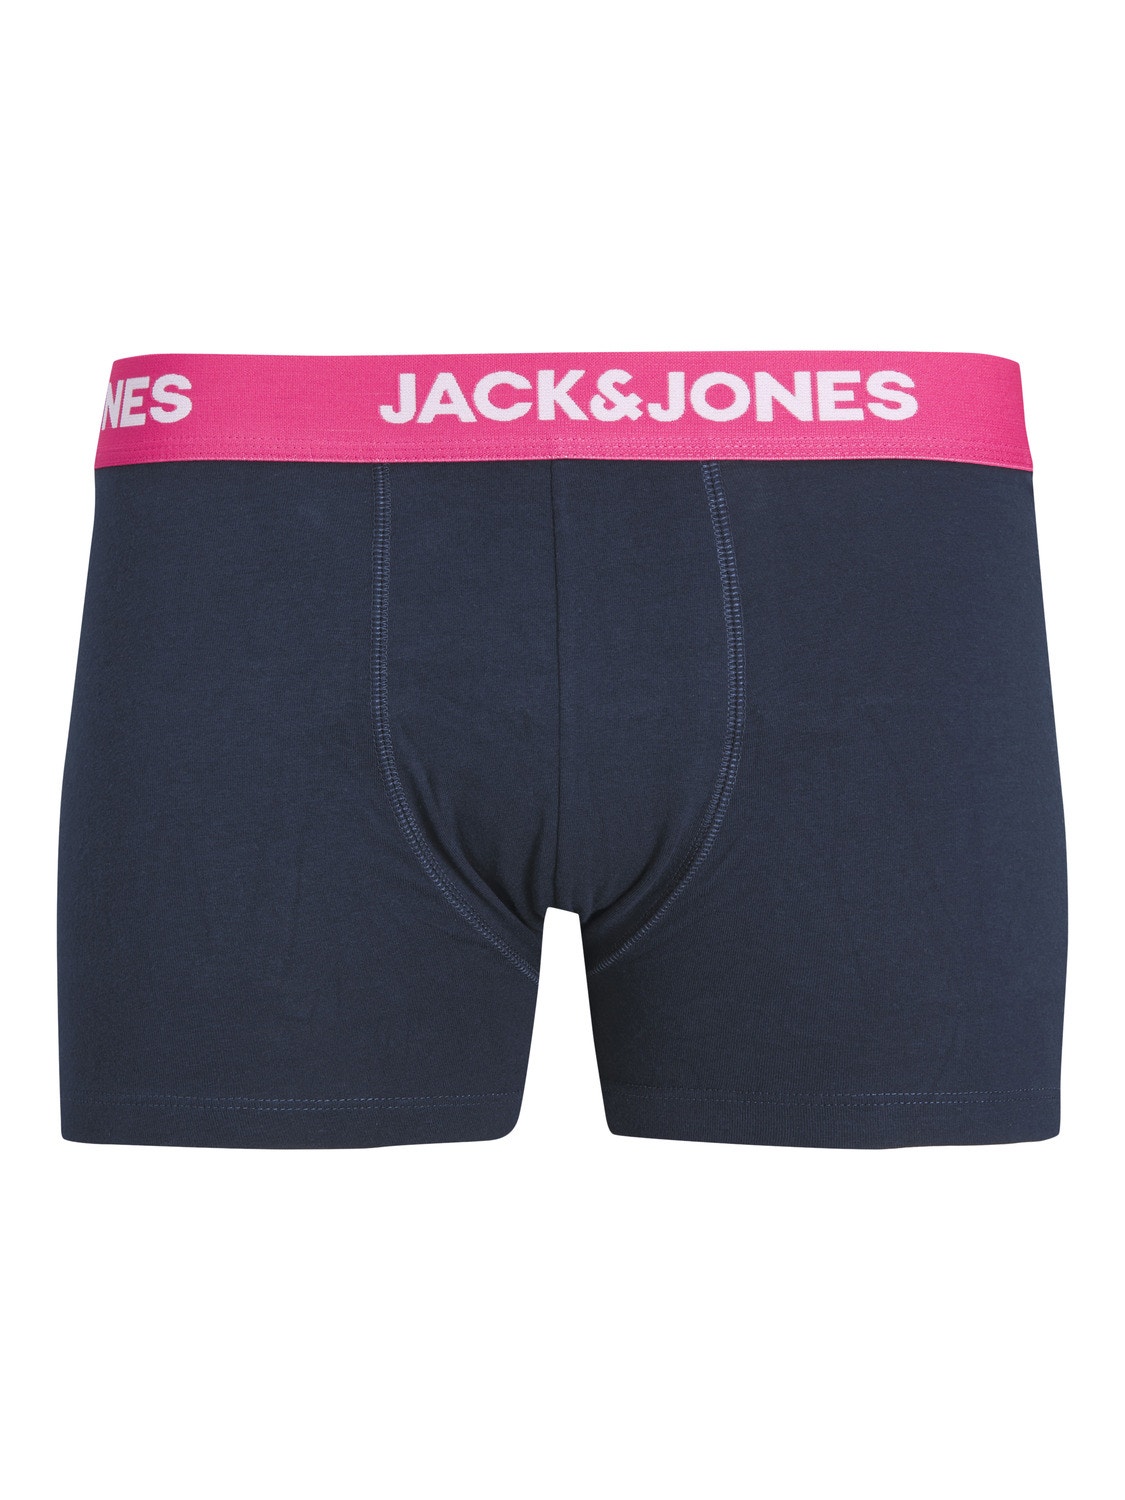 Jack & Jones Plus Size 5-pack Trunks -Navy Blazer - 12240285